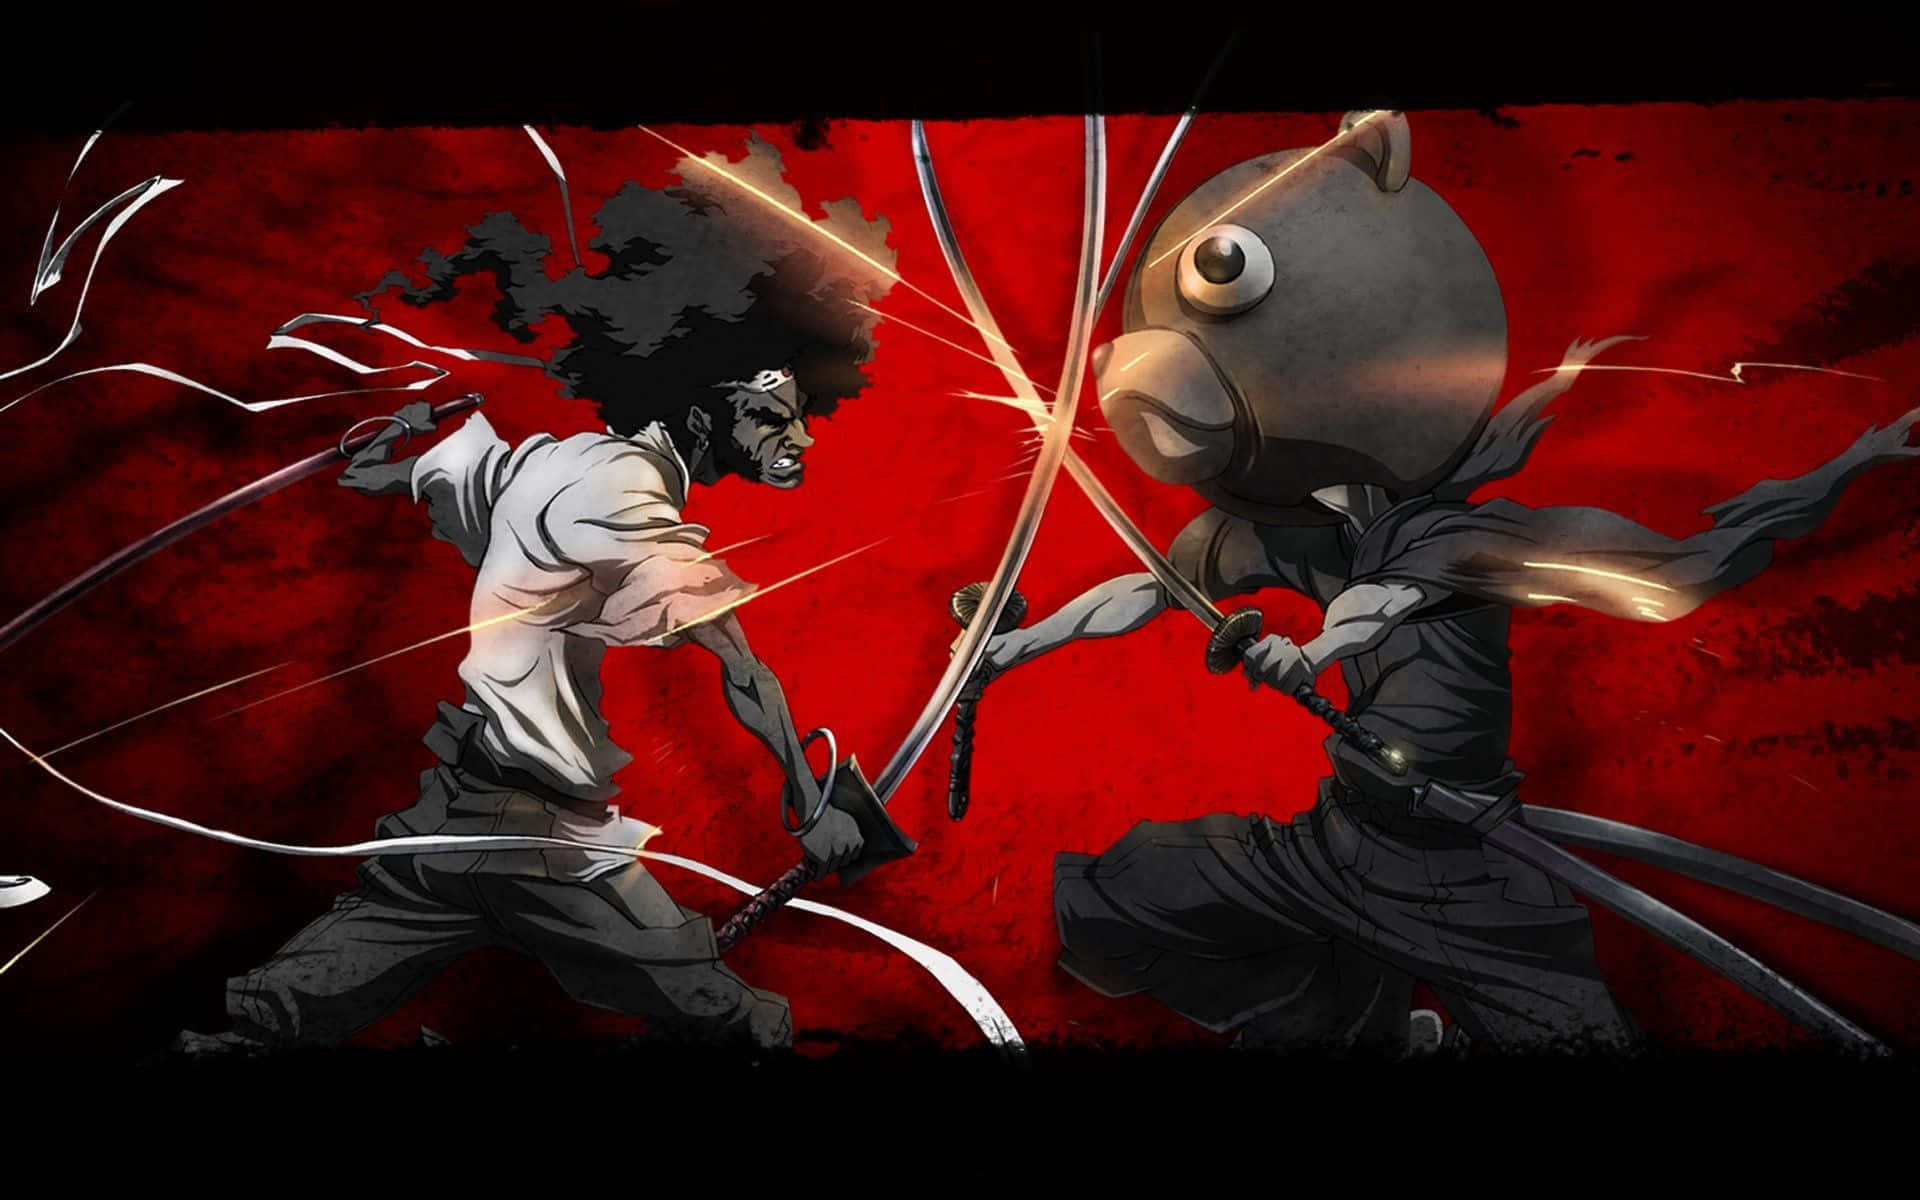 A fierce battle between Afro Samurai and enemy in a ravishing sunset scene Wallpaper